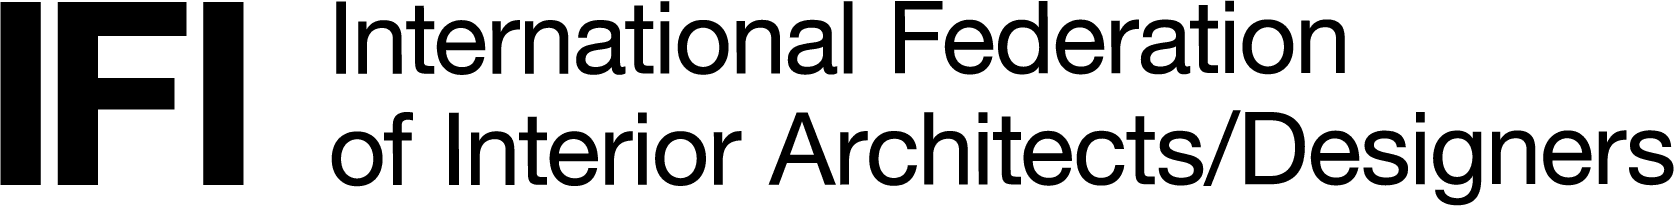 IFI – International Federation of Interior Architects/Designers